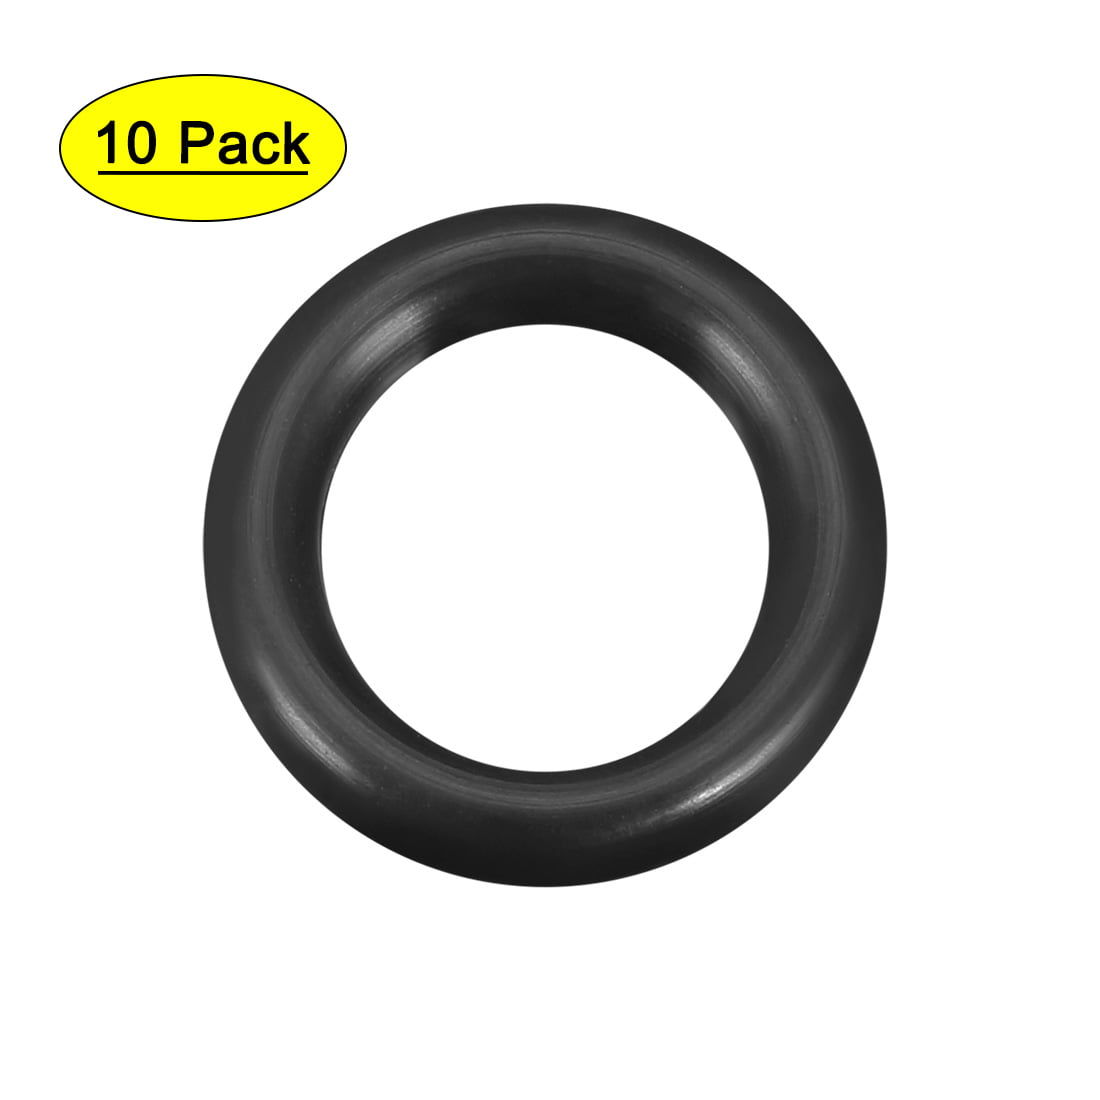 Metric Buna  O-rings 19 x 4mm Price for 10 pcs 